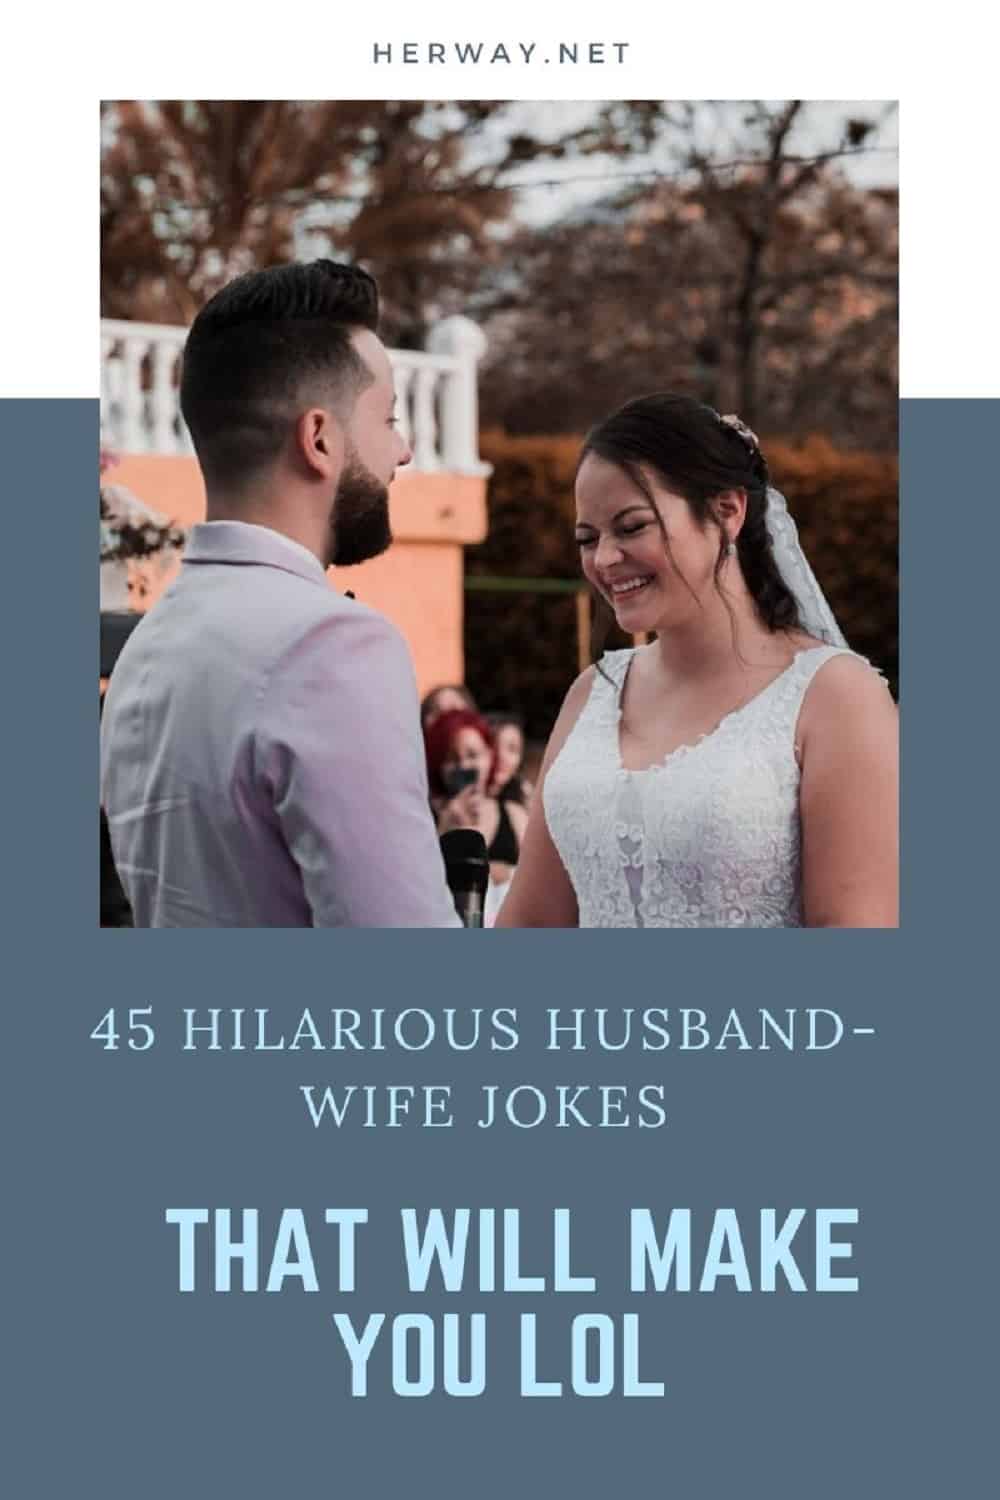 45 Hilarious Husband-Wife Jokes That Will Make You LOL Pinterest